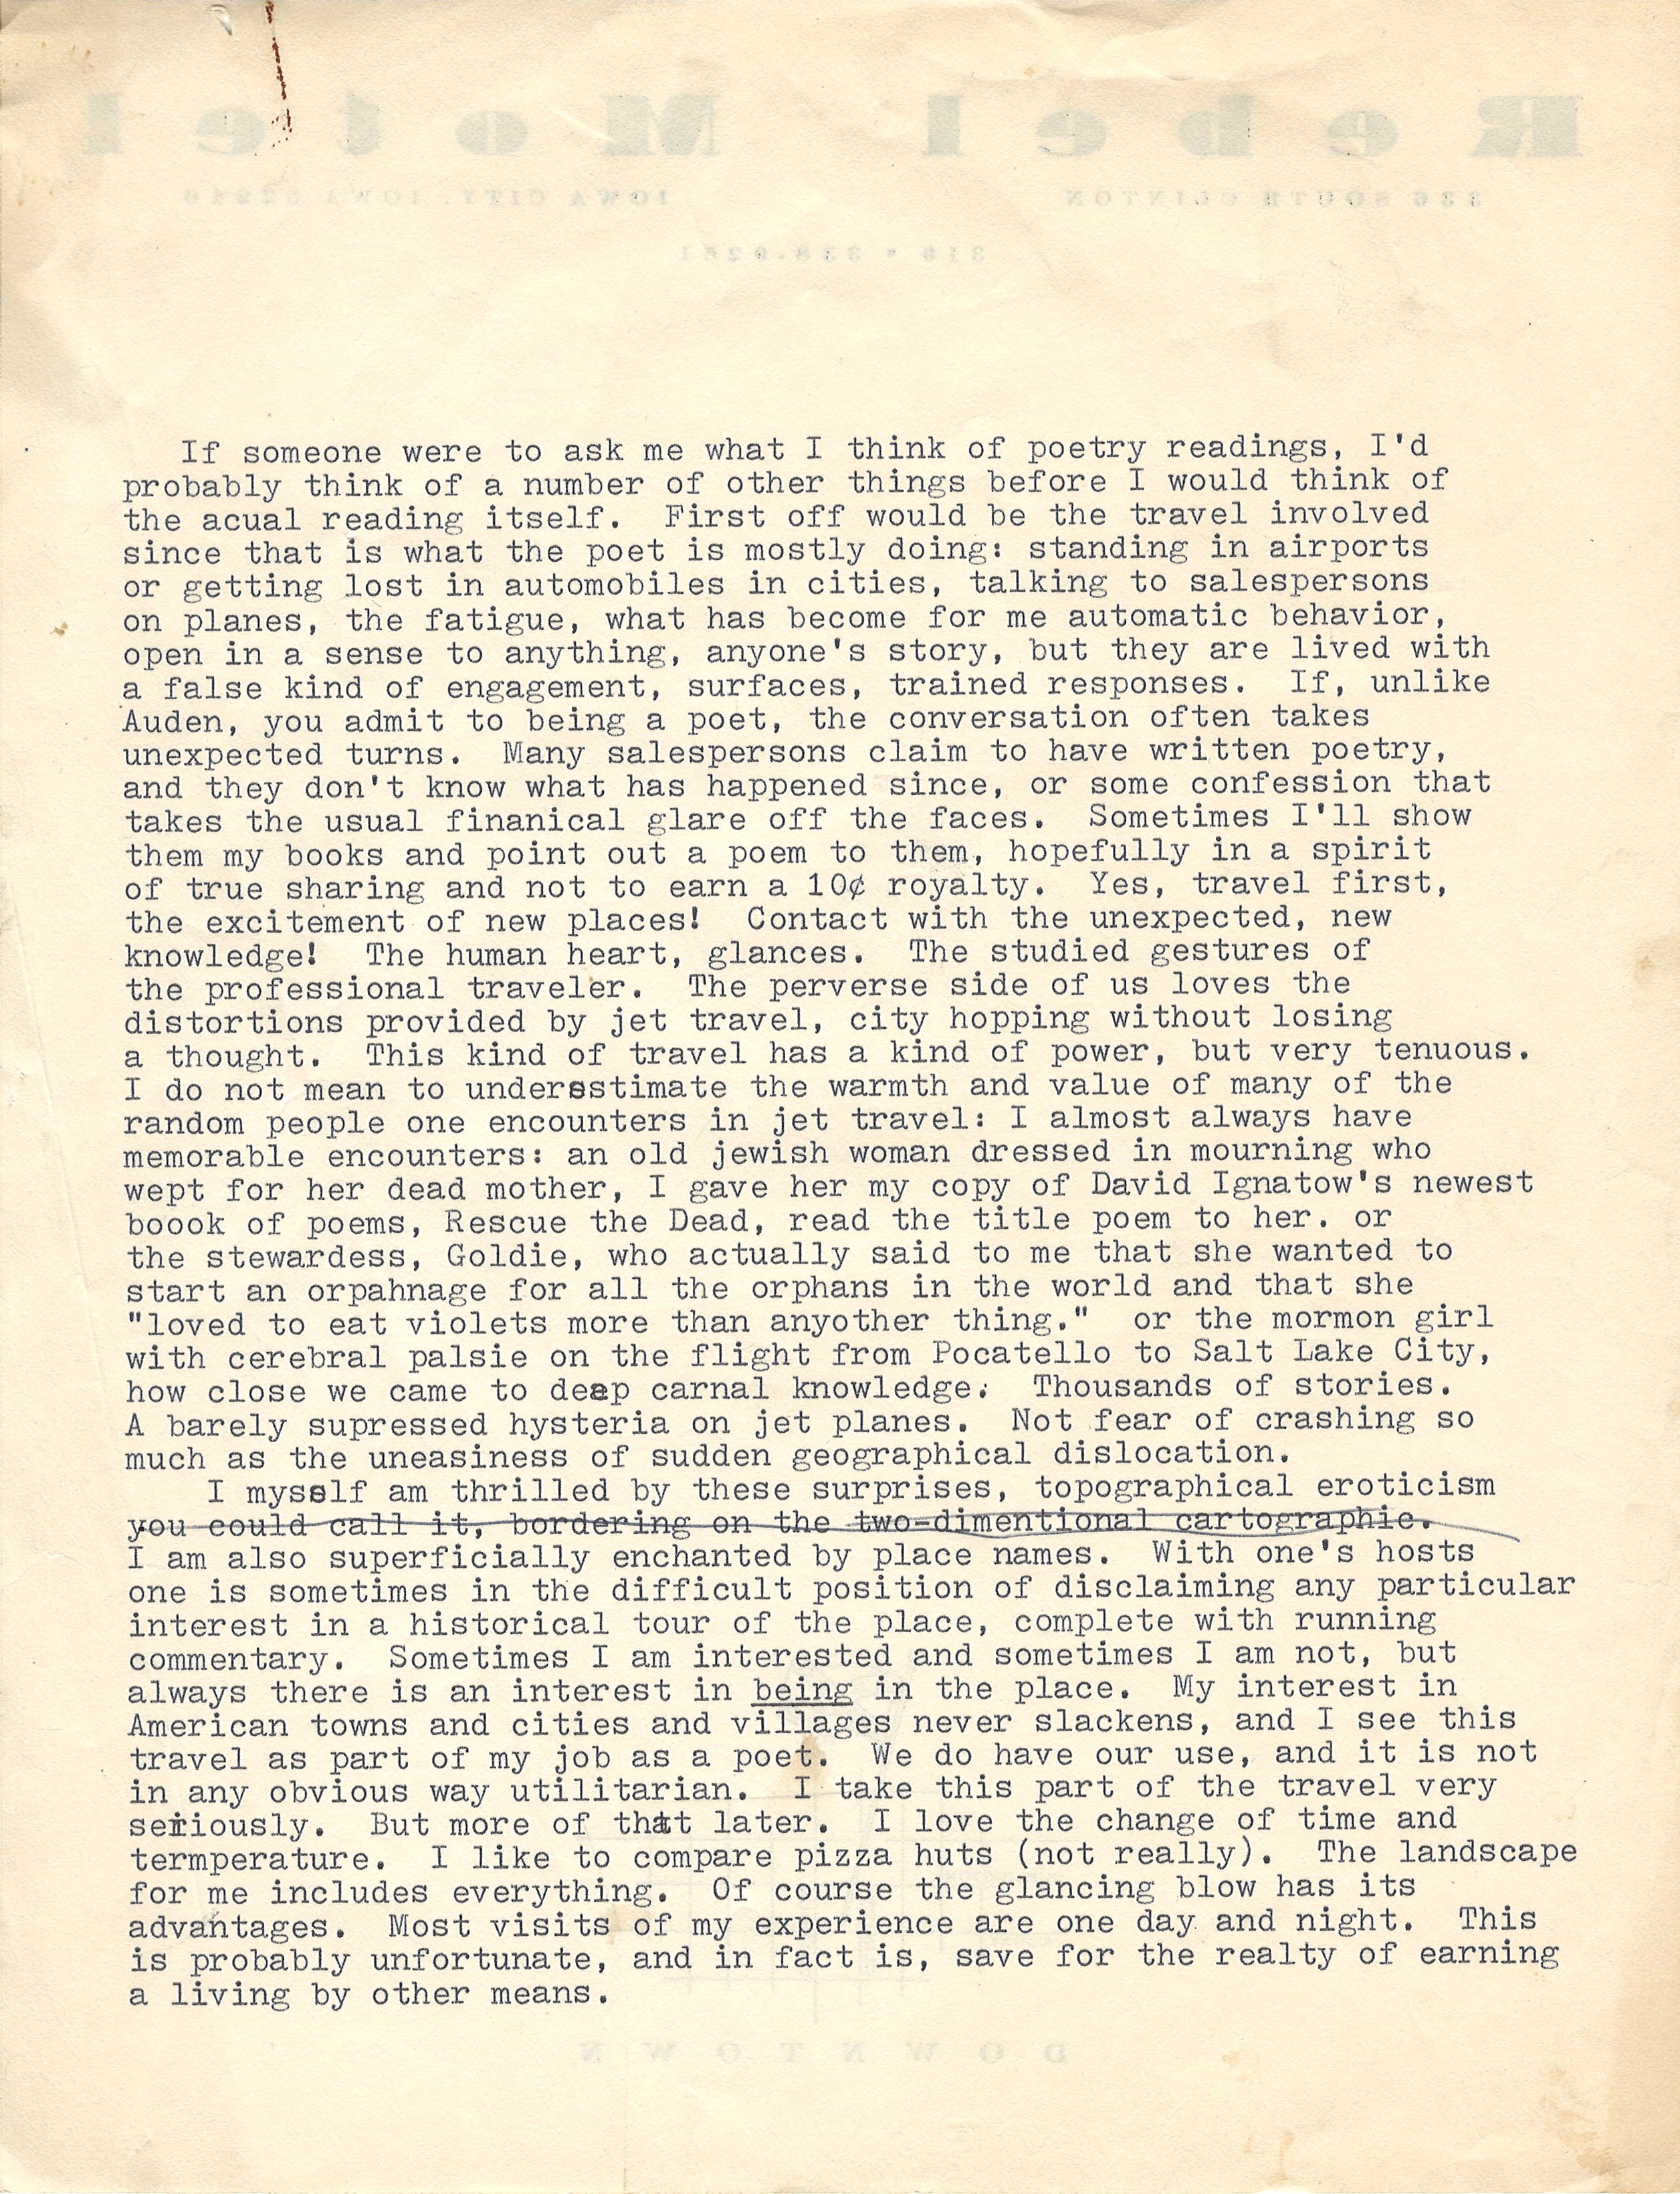 Typewritten essay by James Tate